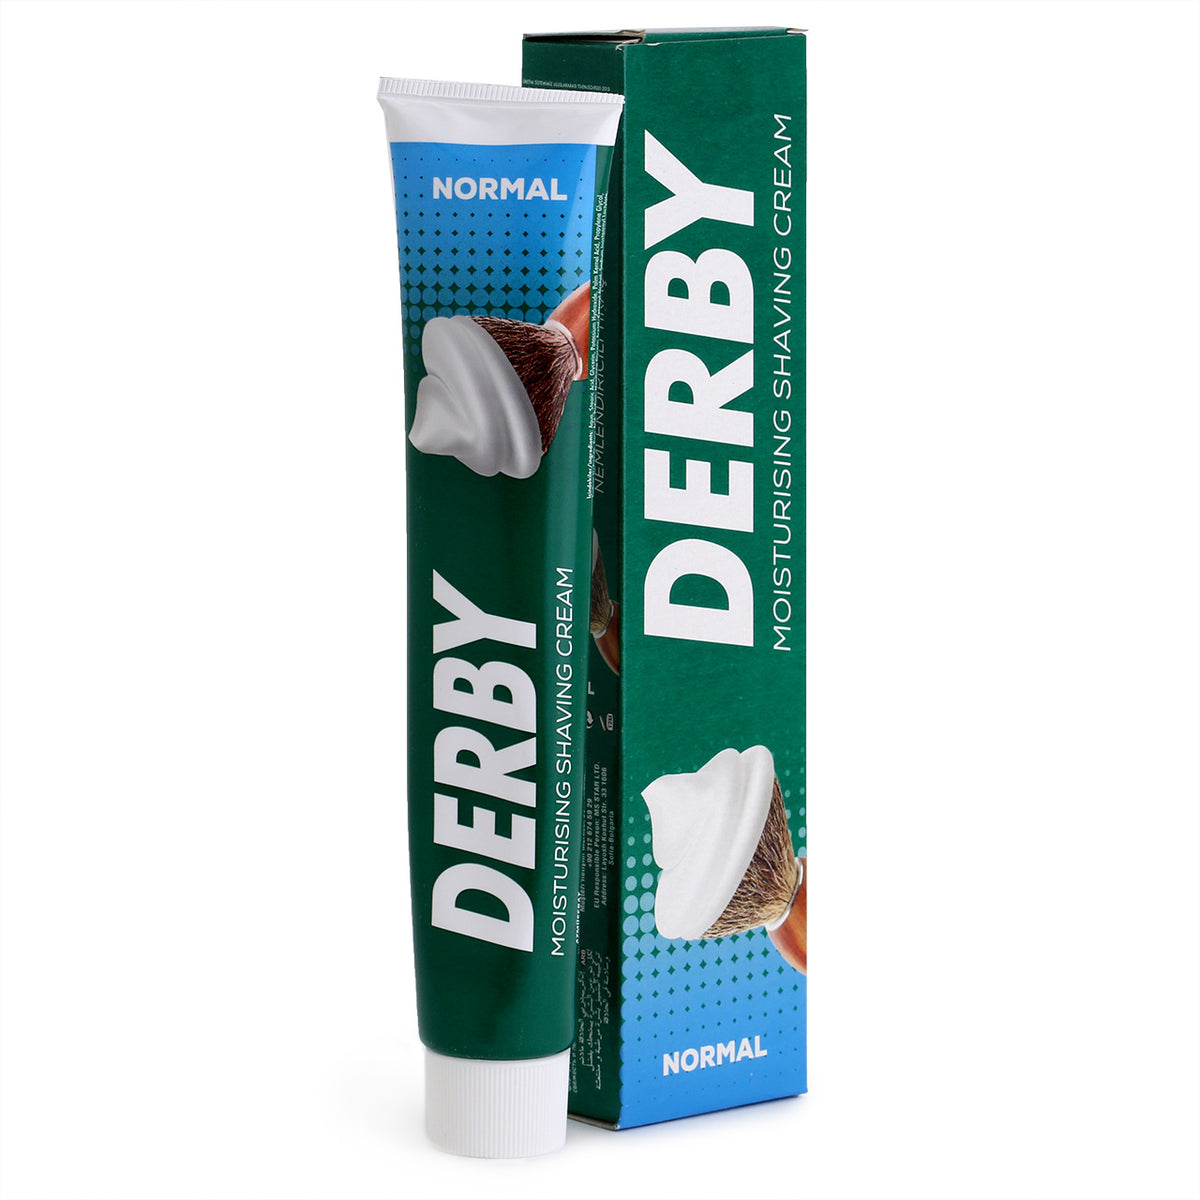 Derby Shaving Cream 100ml, Normal scent